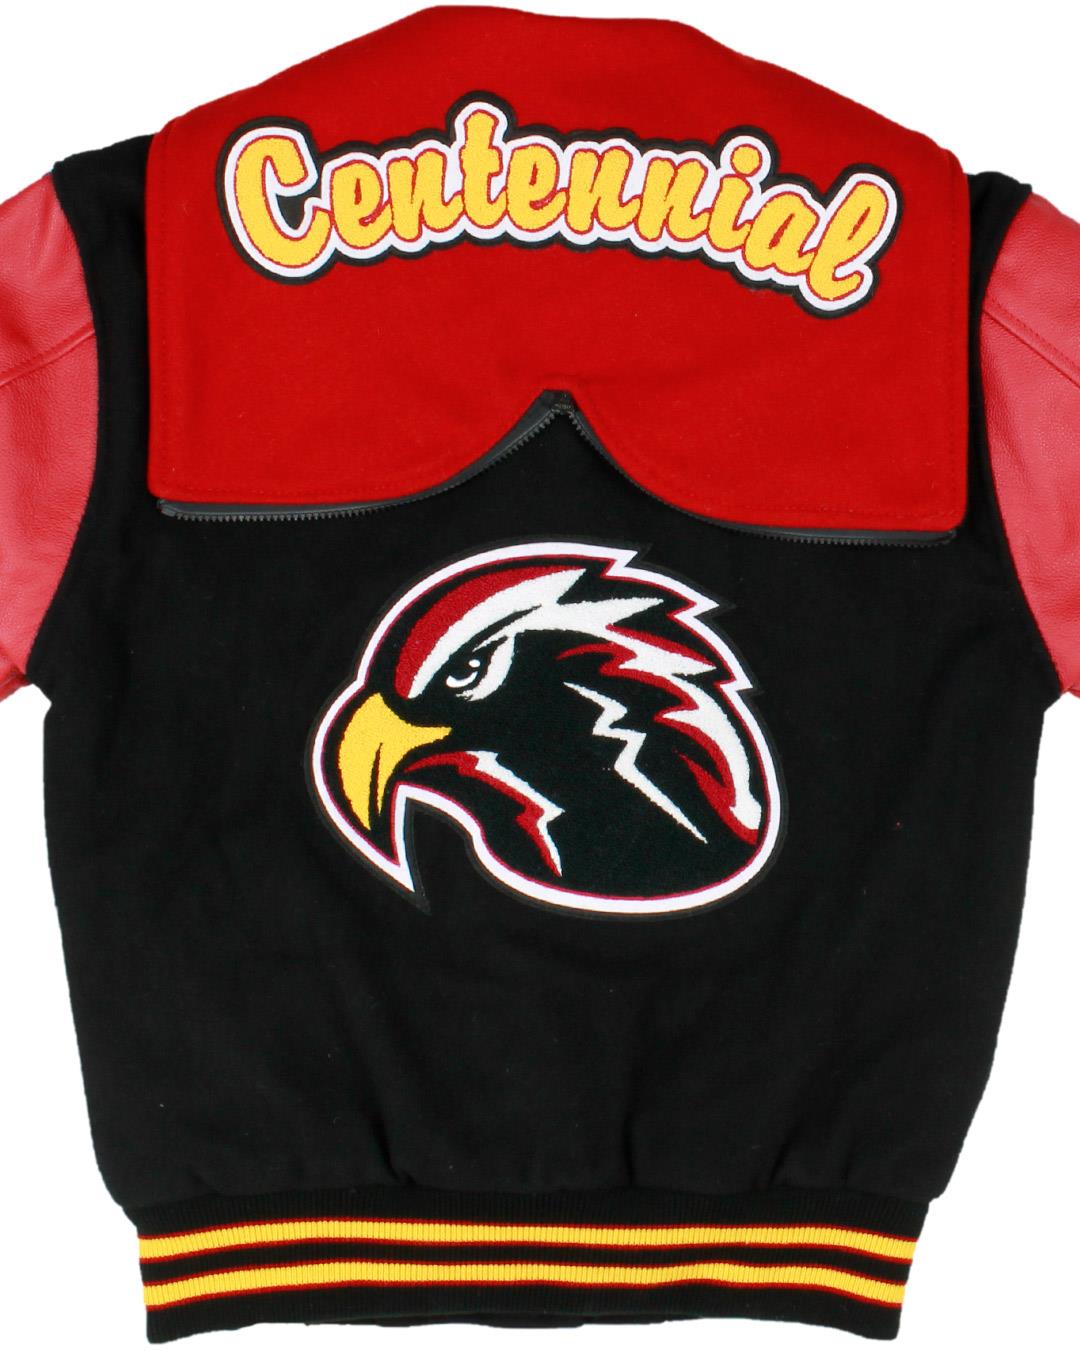 Centennial High School Varsity Jacket, Las Cruces, NM - Back